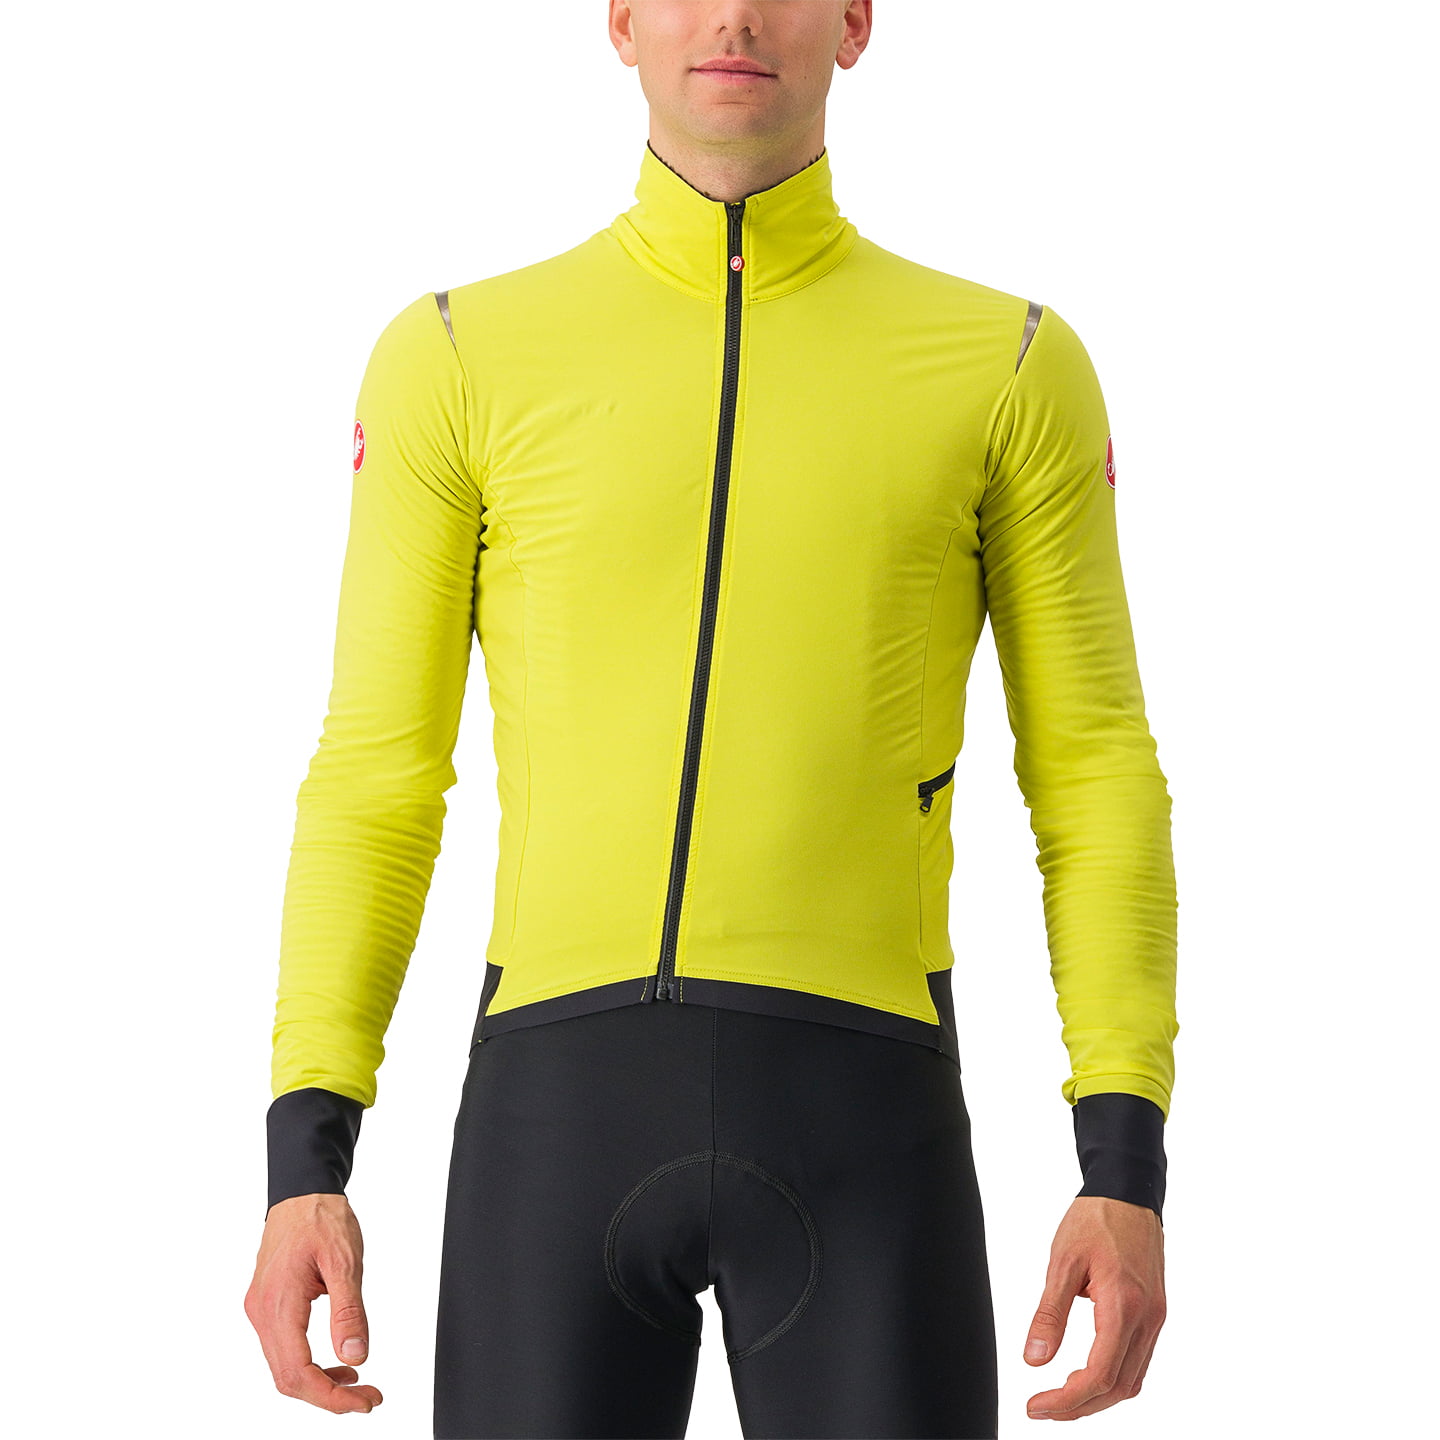 CASTELLI Winter Jacket Alpha Flight RoS Thermal Jacket, for men, size 2XL, Winter jacket, Cycling clothing